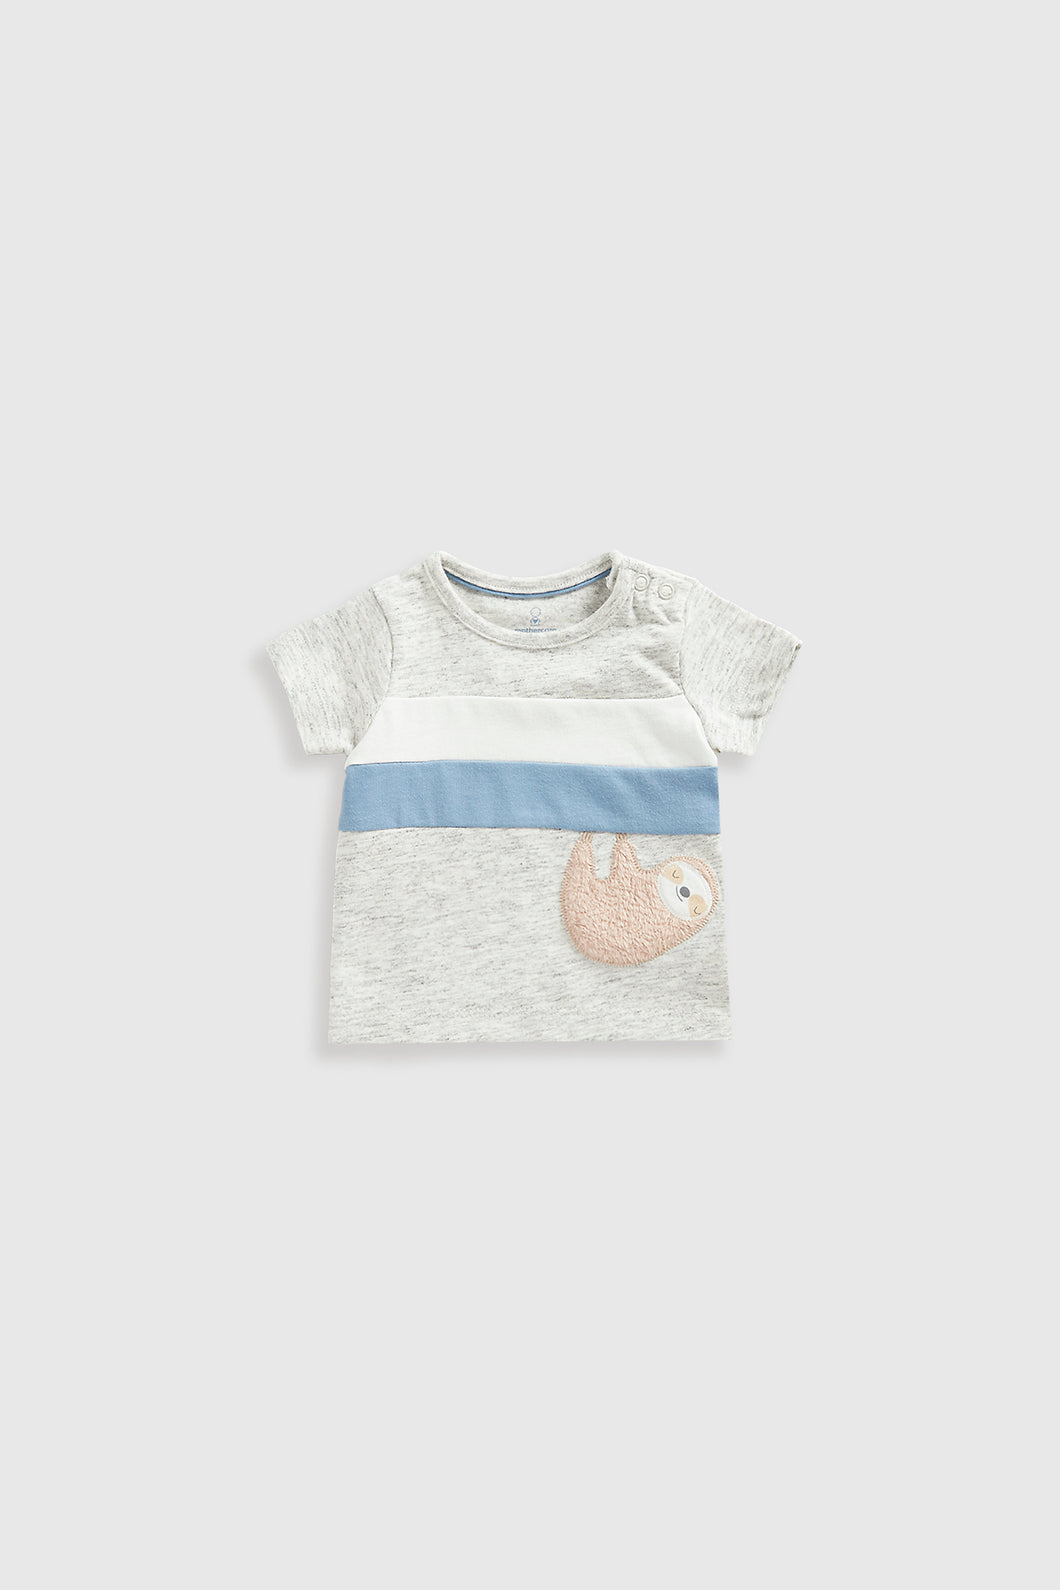 Mothercare Sloth T-Shirt